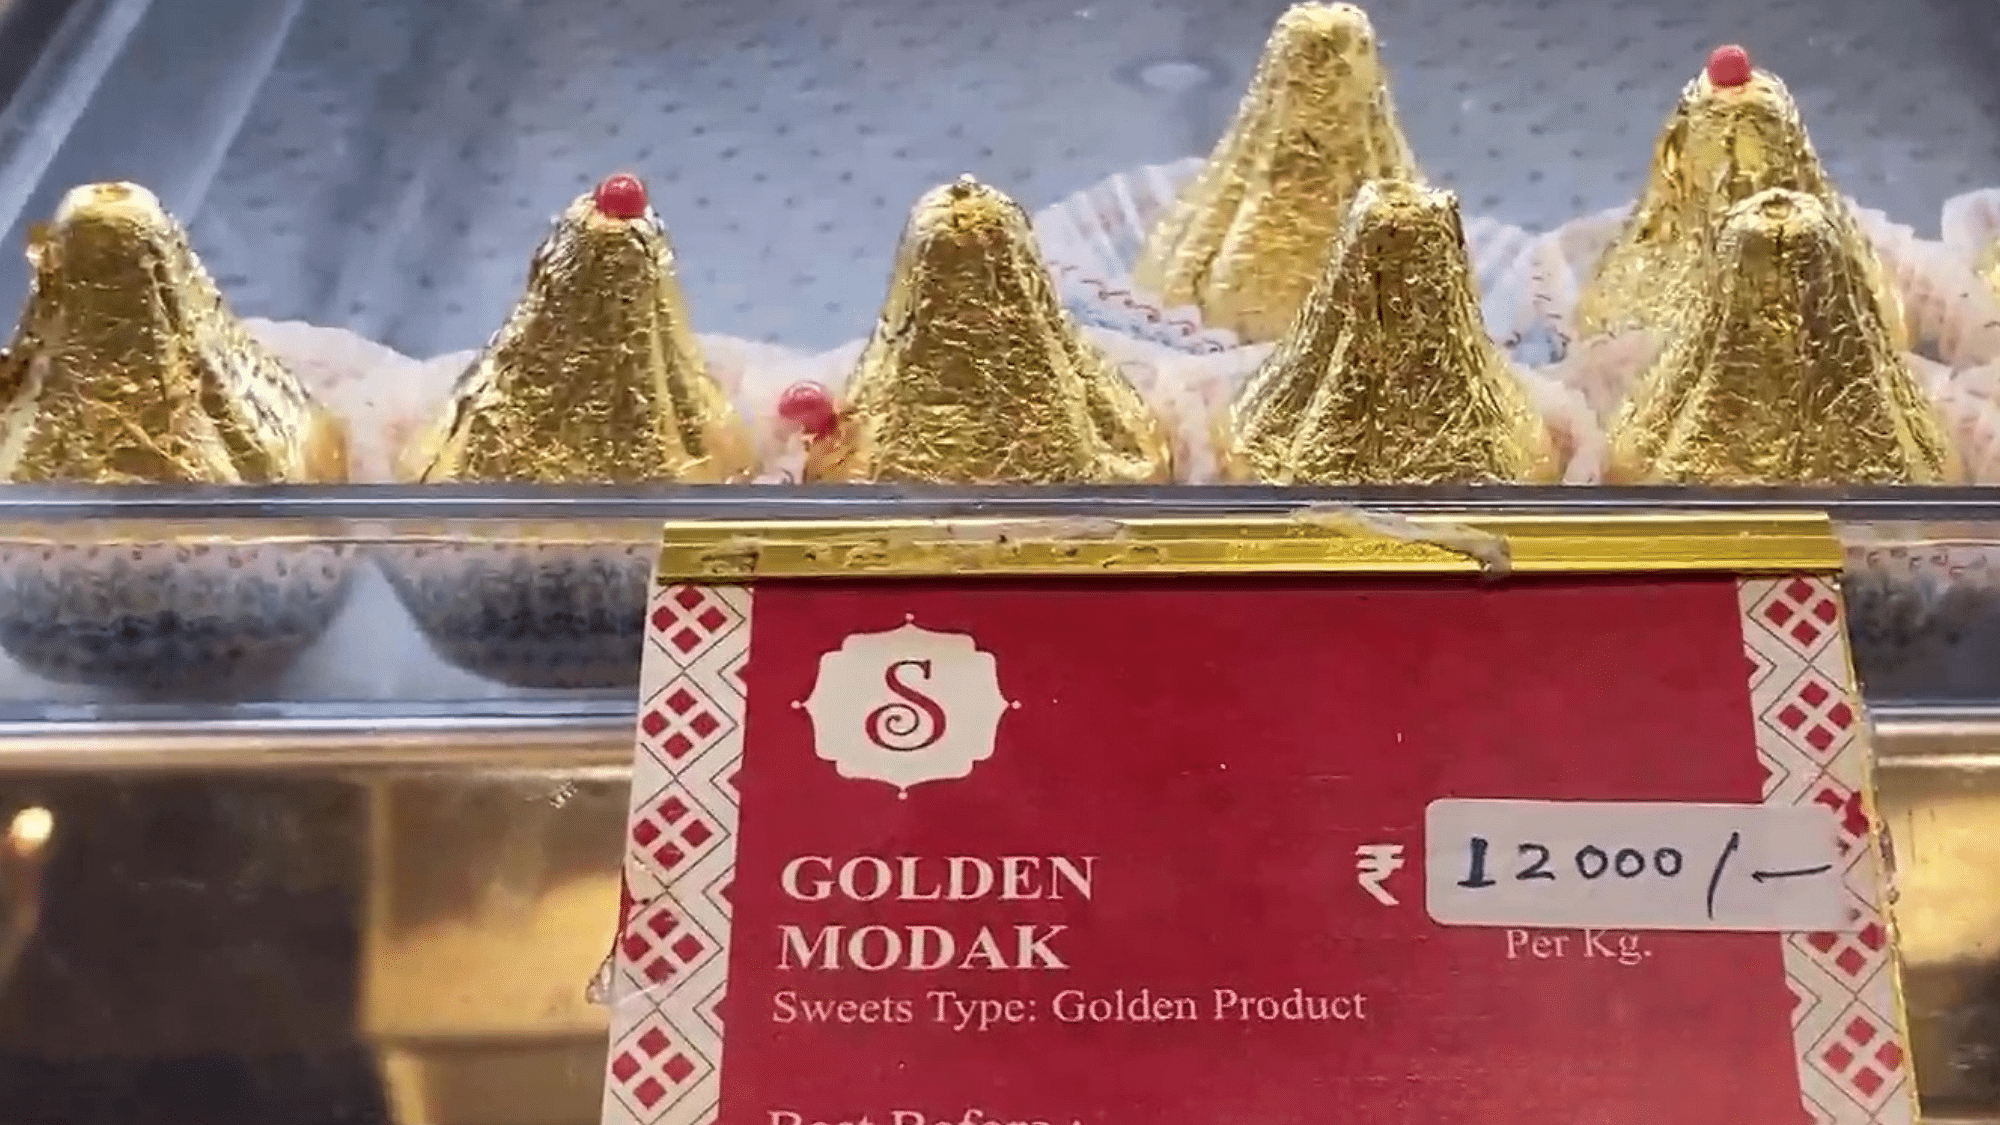 <div class="paragraphs"><p>Gold modaks at Sagar Sweets, Nashik for Rs 12,000 per kg.</p></div>